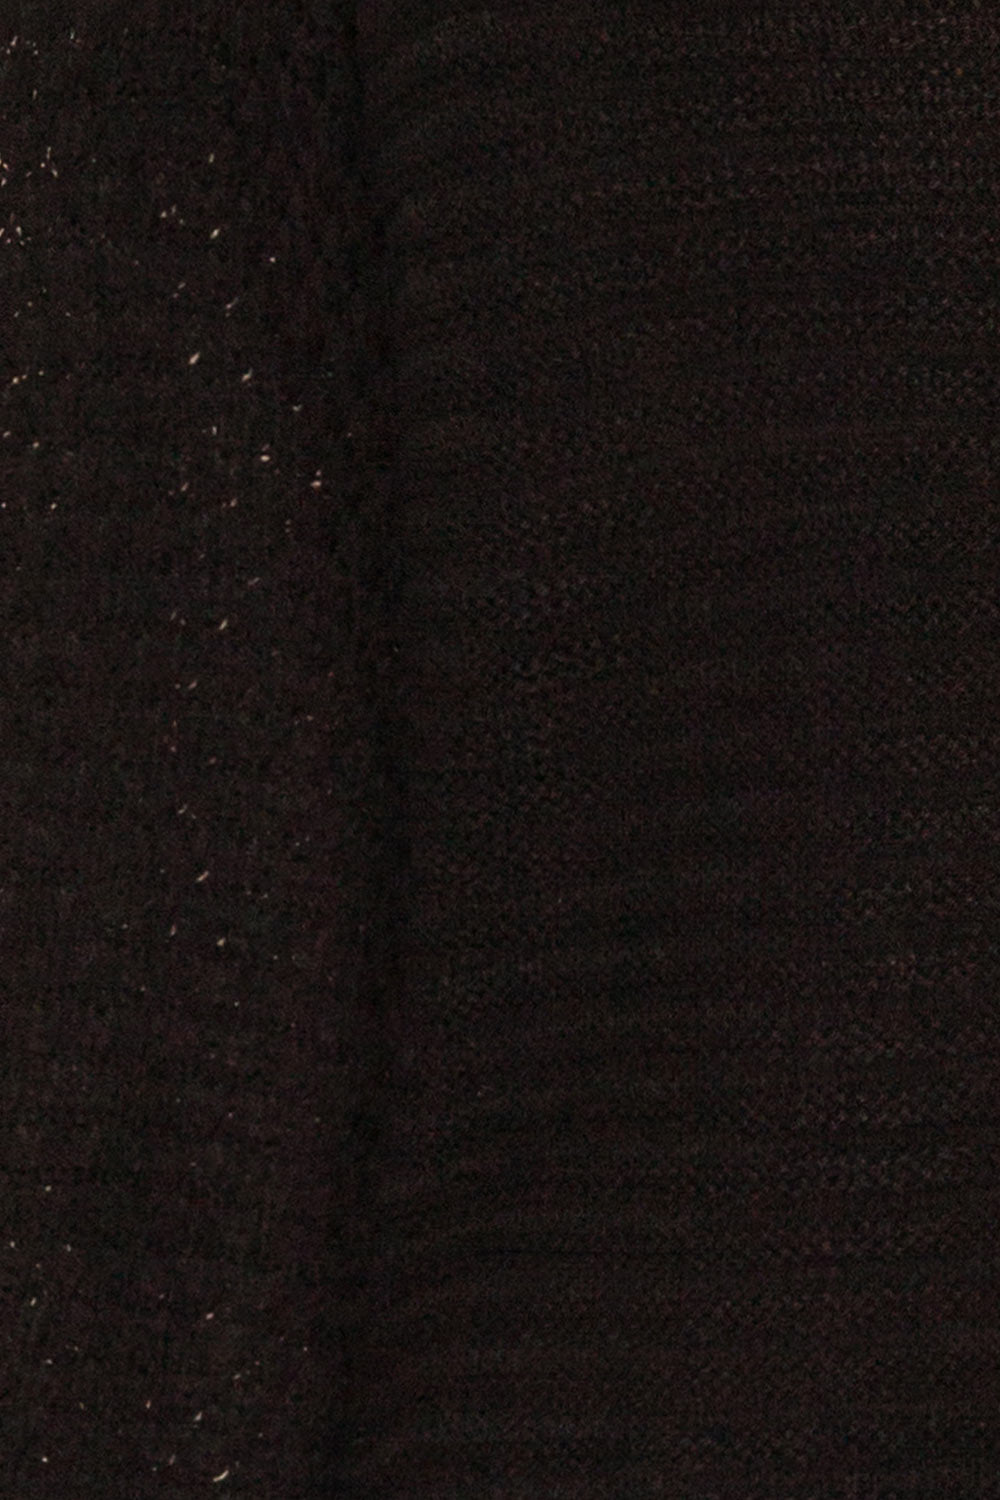 Eutin Black Long Sleeve Knit Sweater | La petite garçonne fabric